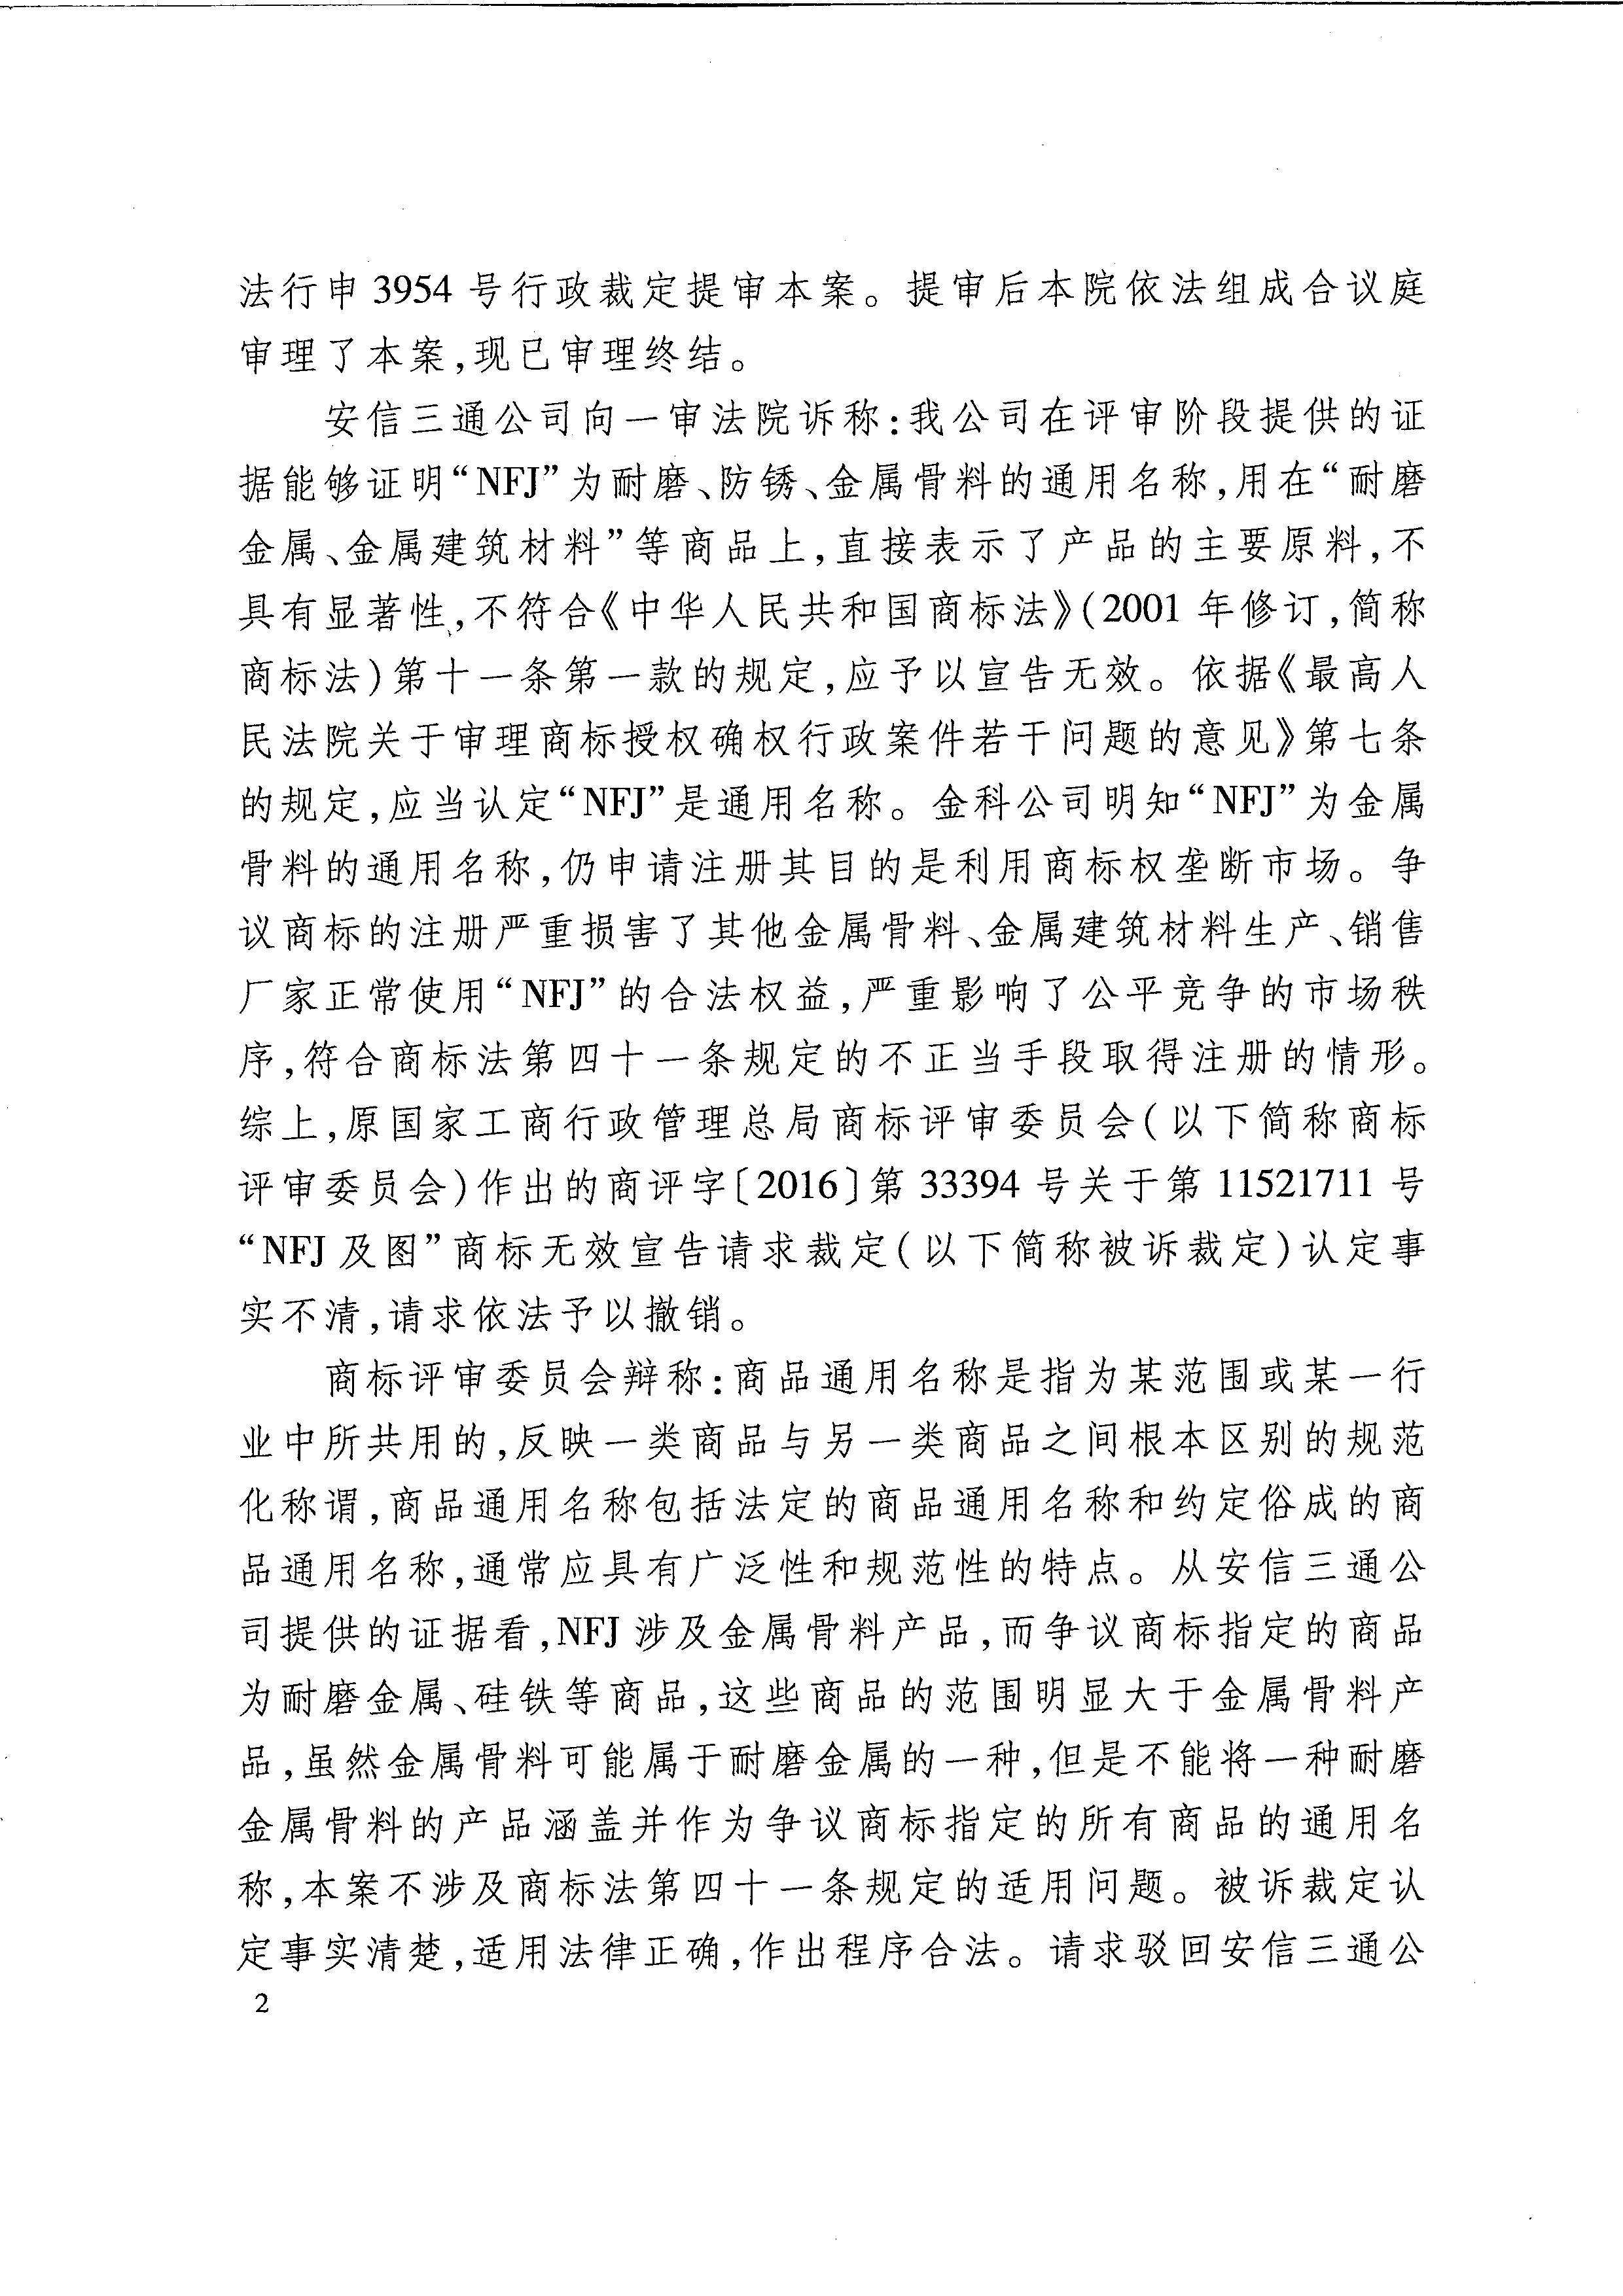 再审行政判决书(1)_Page_02.png